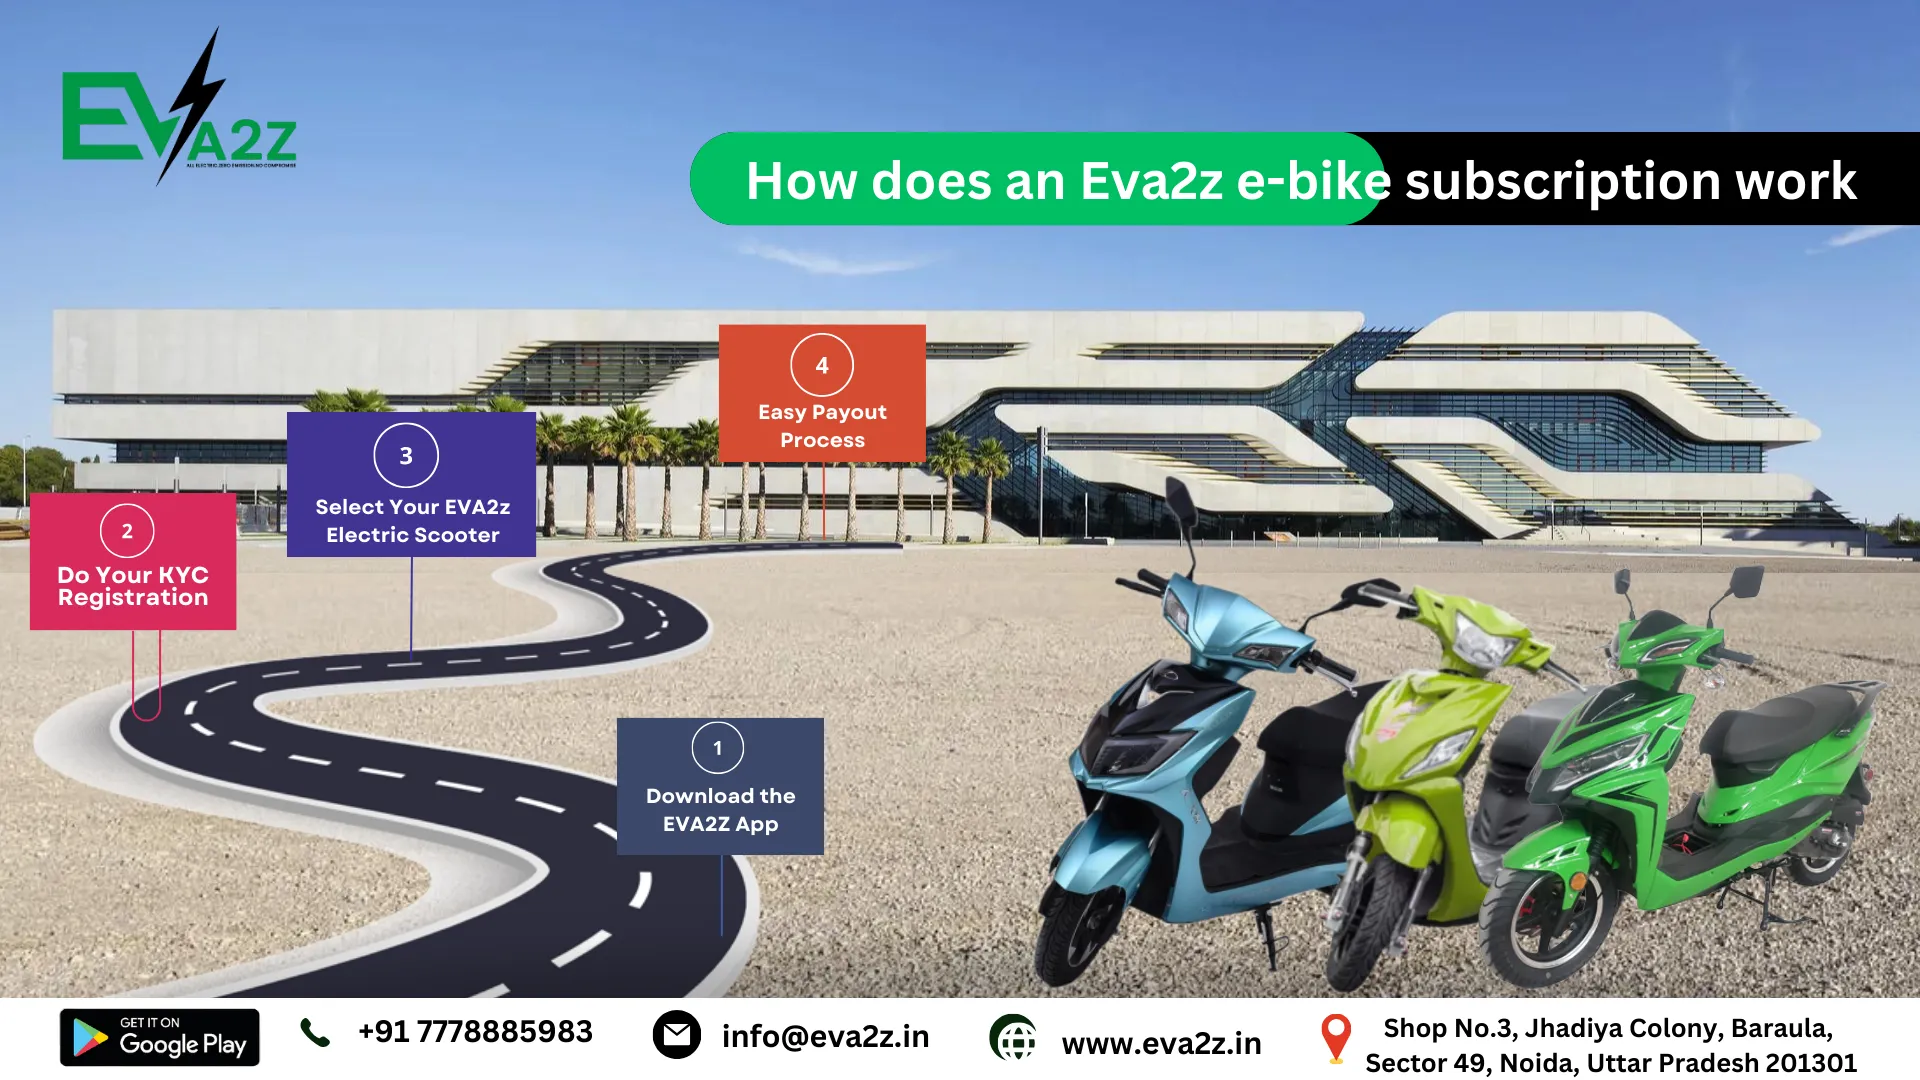 How Does An Eva2z E-Bike Subscription Work